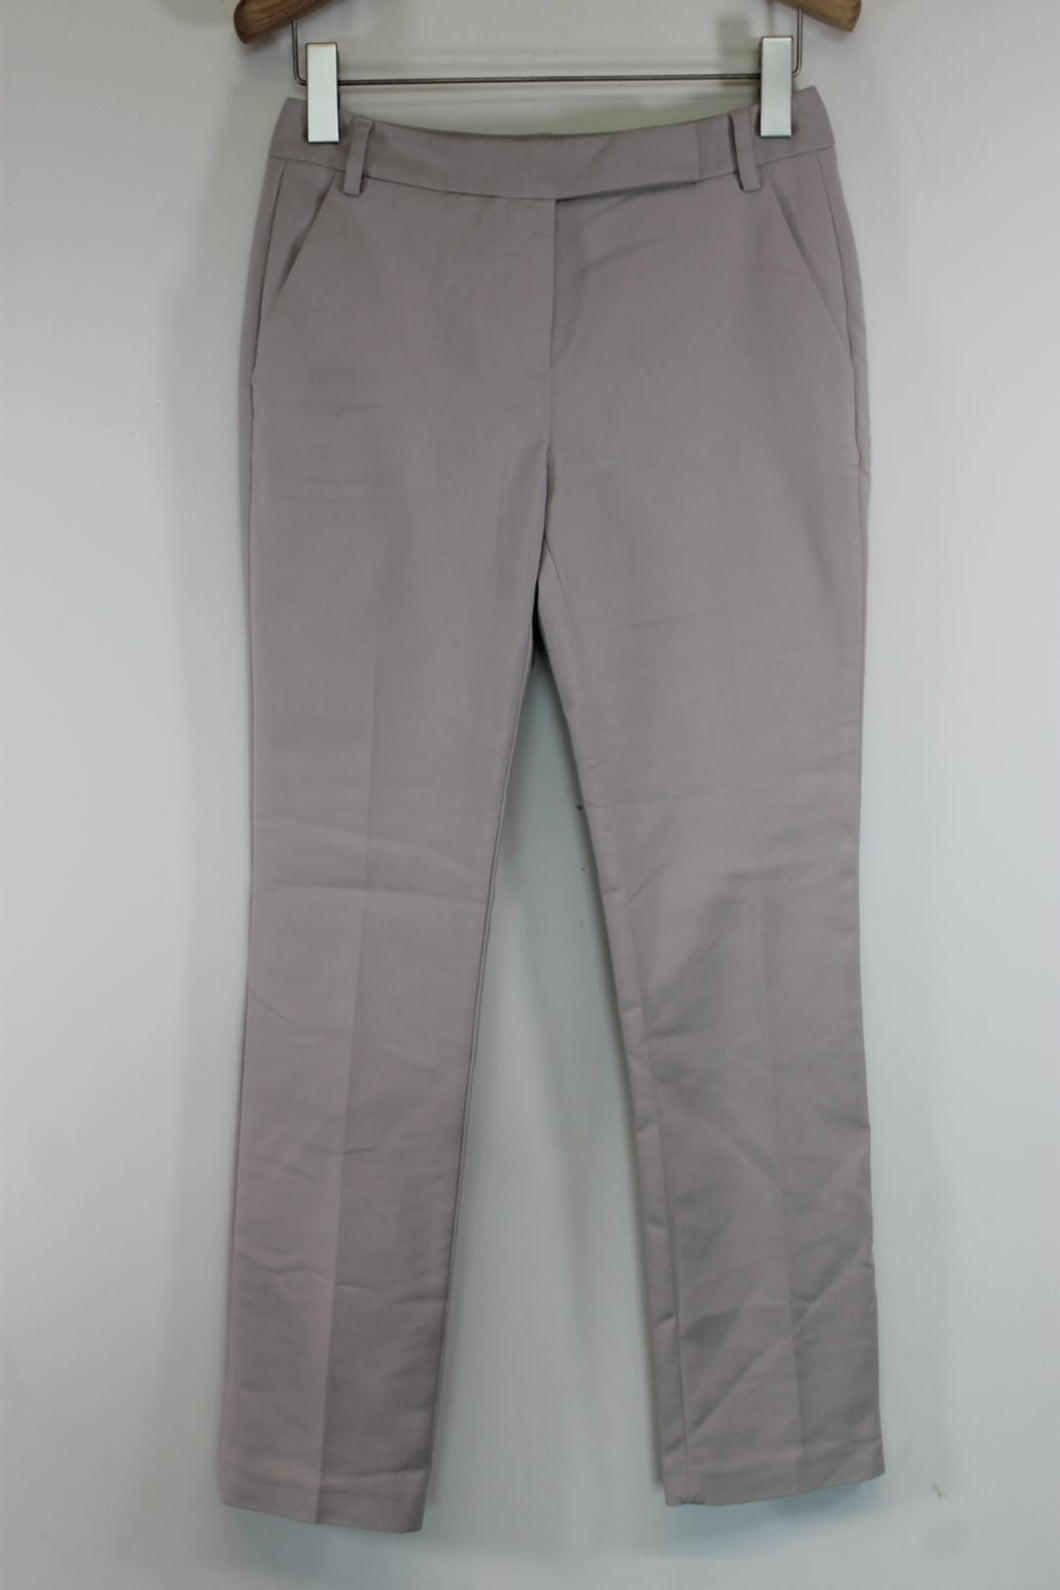 REISS Ladies Neutral Cotton Joanna Slim Fit Dress Trousers EU34 UK6